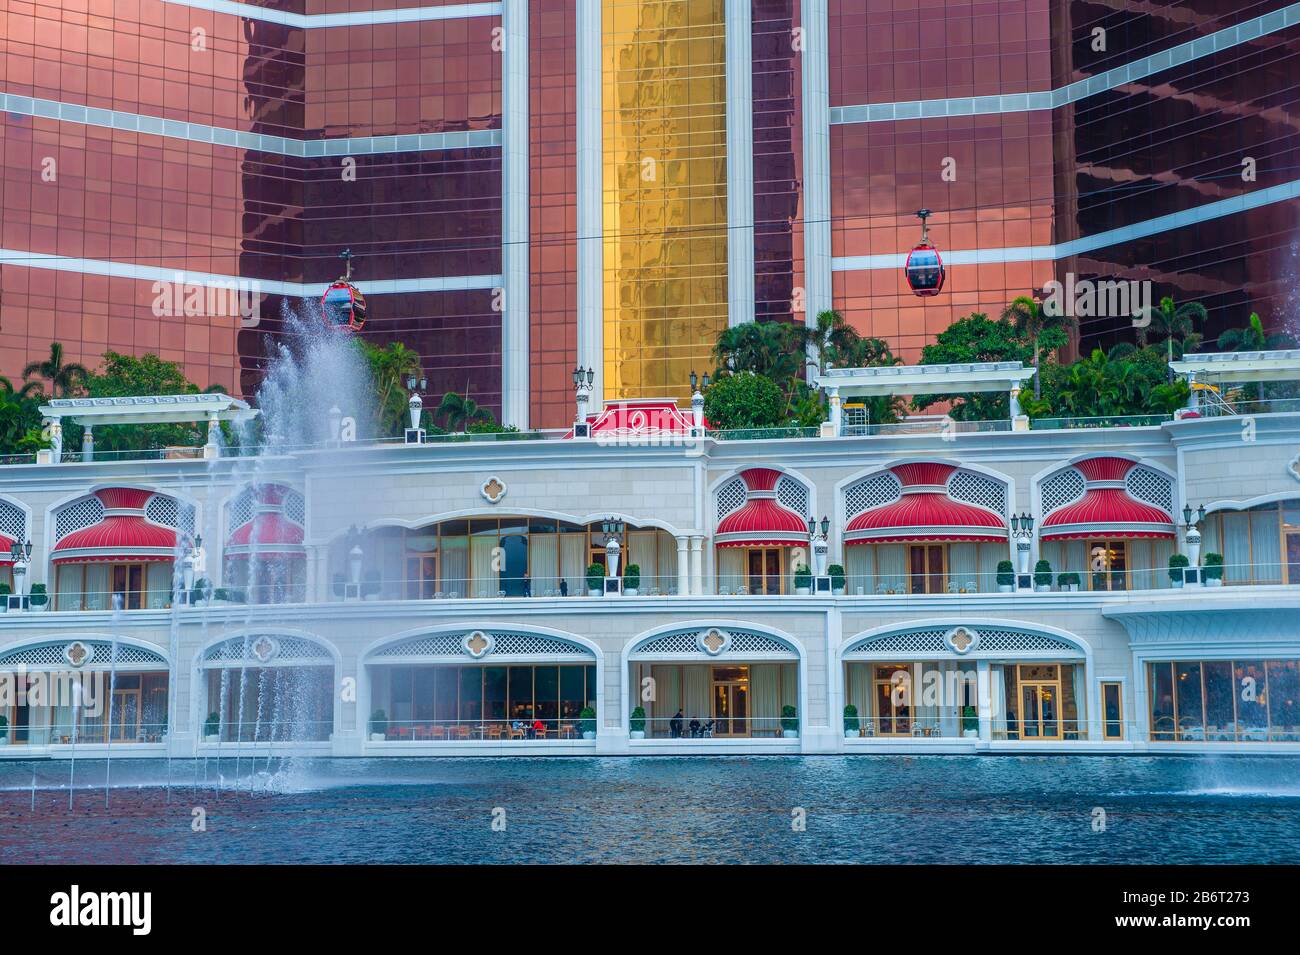 The Wynn palace Hotel and casino in Macau Stock Photo